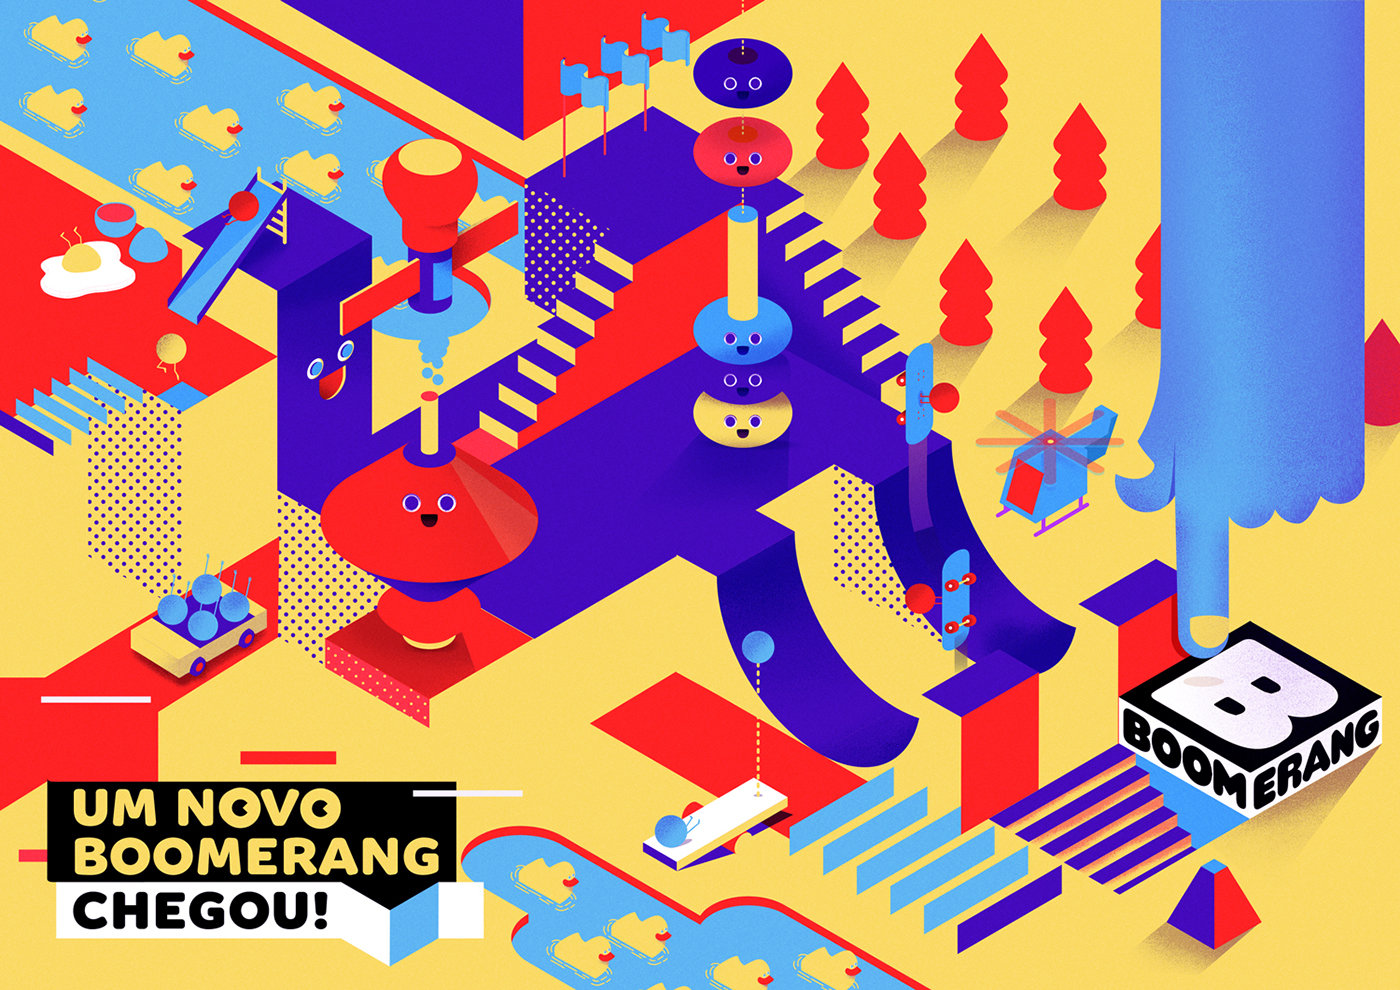 Boomerang cartoon network Brazil Brasil bumpers tv